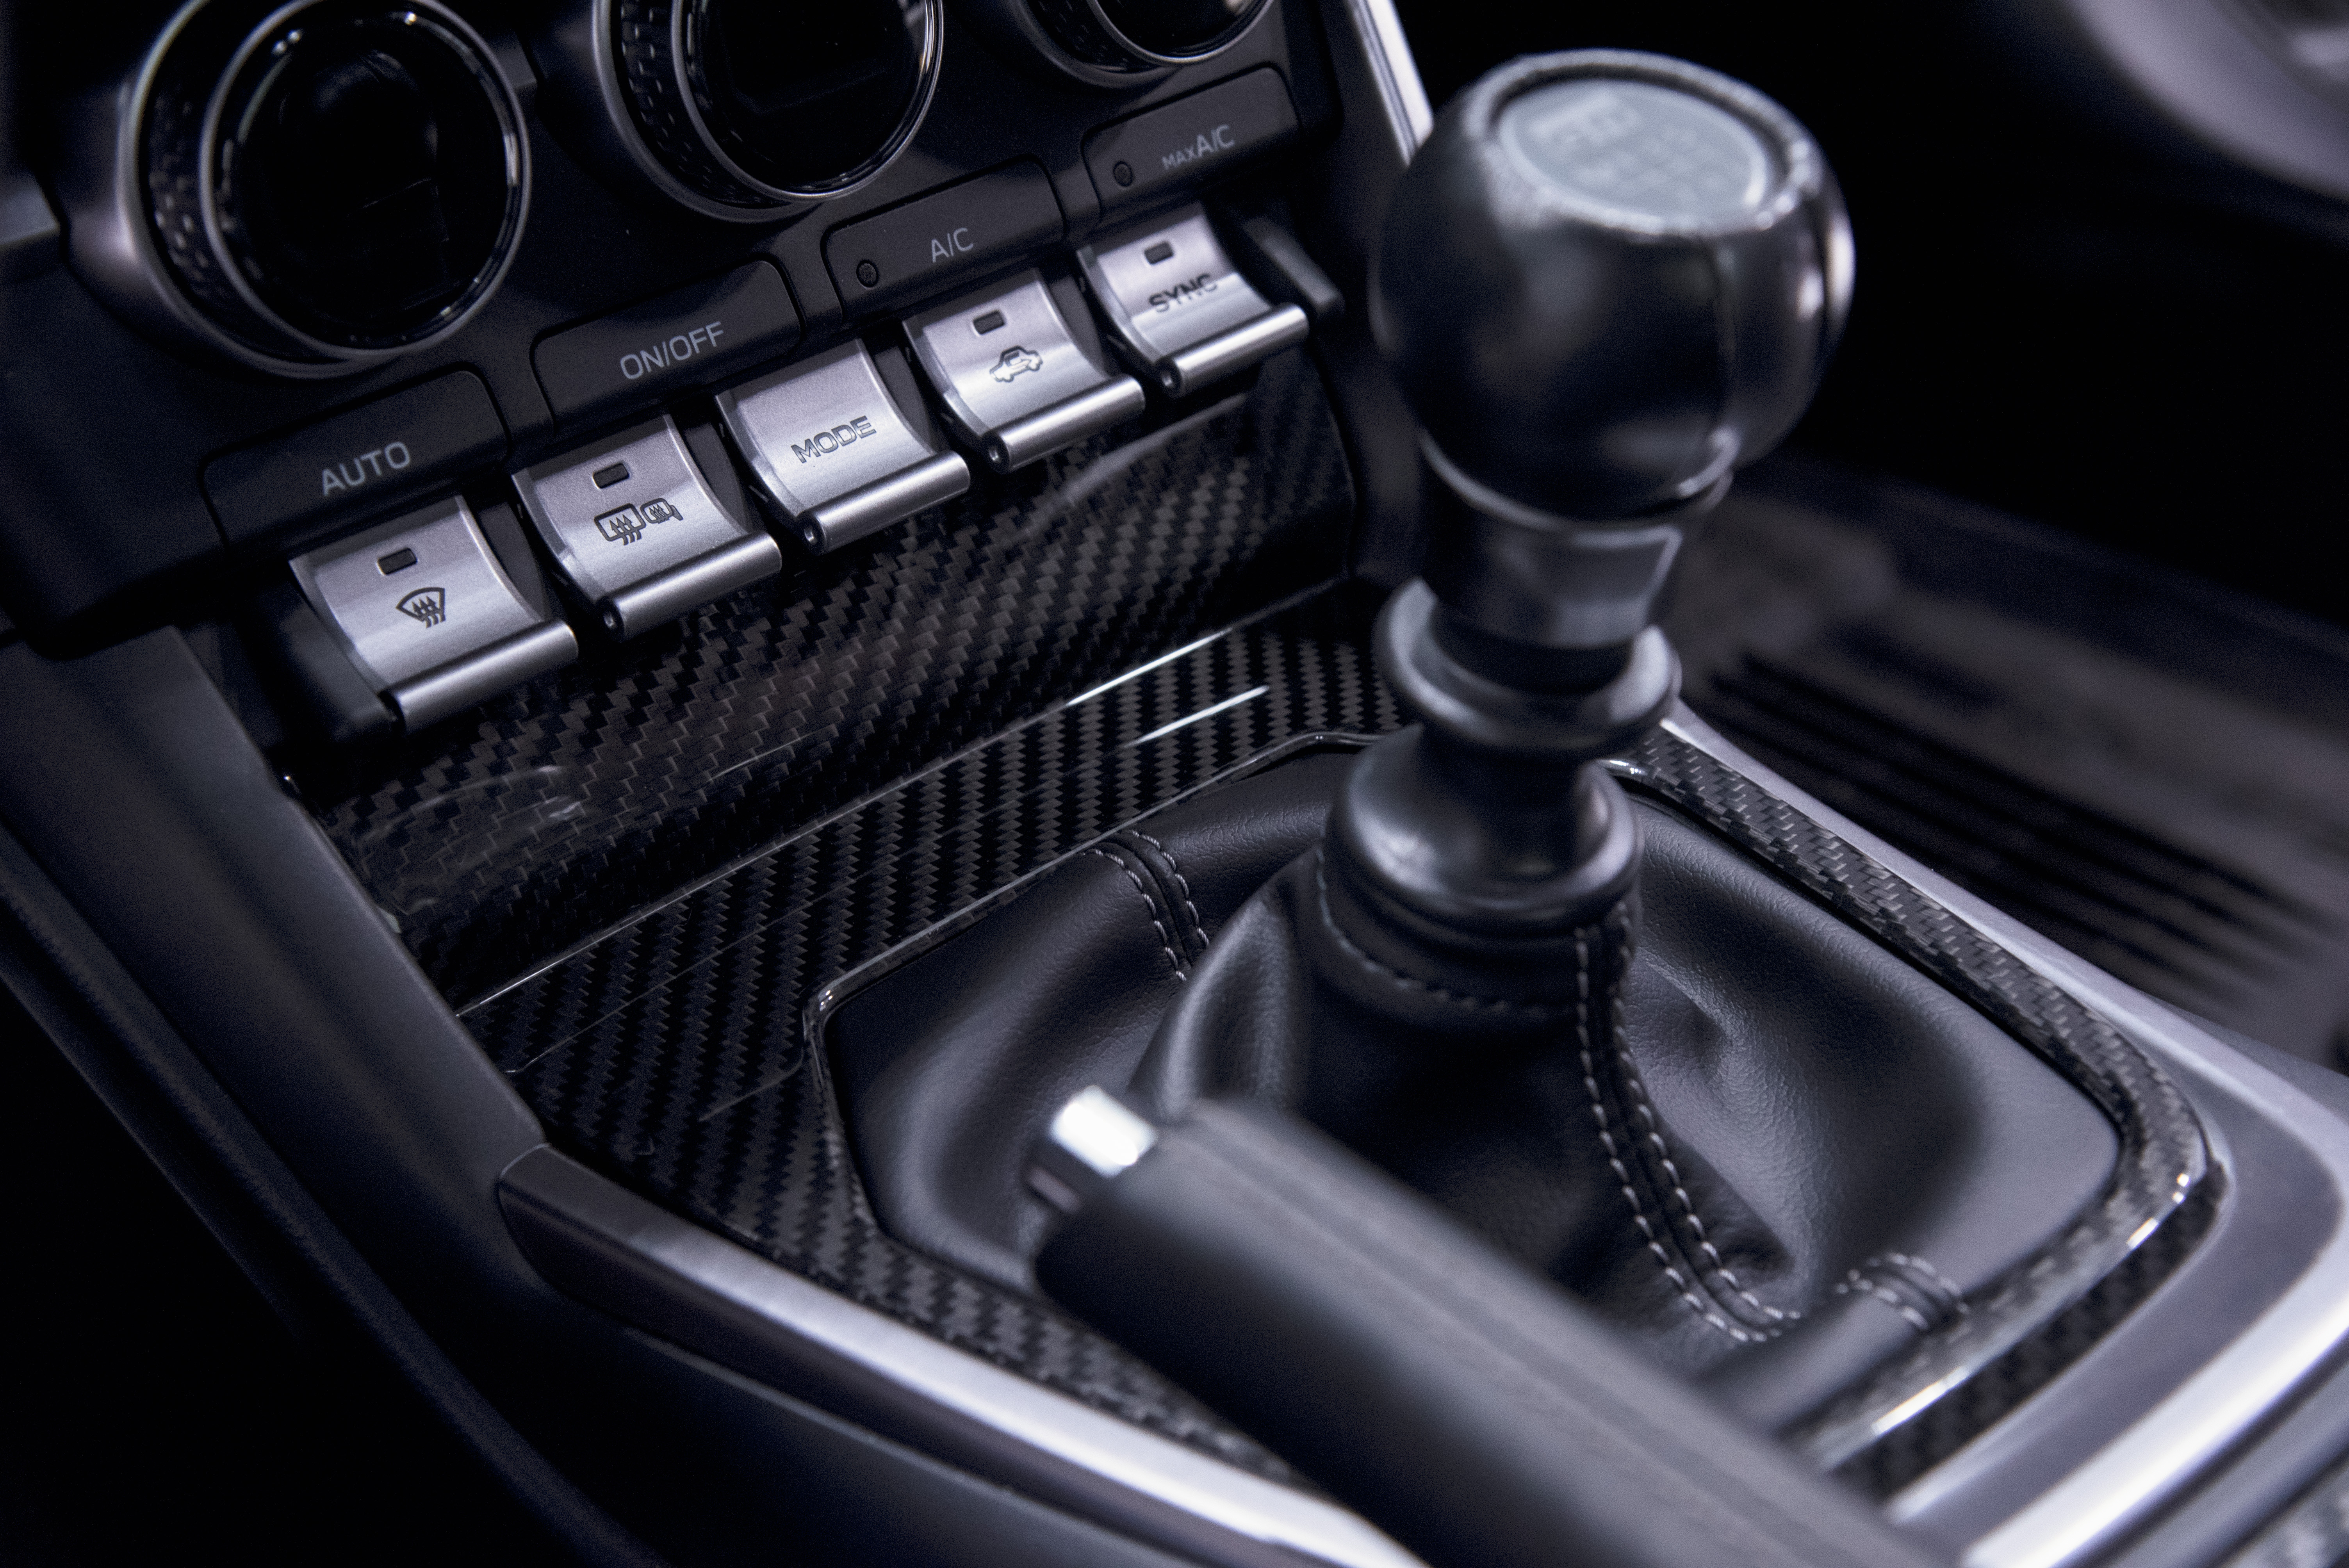 OLM LE Dry Carbon Fiber Shift Panel Trim for Manual Transmissions Installed on a 2022 Toyota GR86 